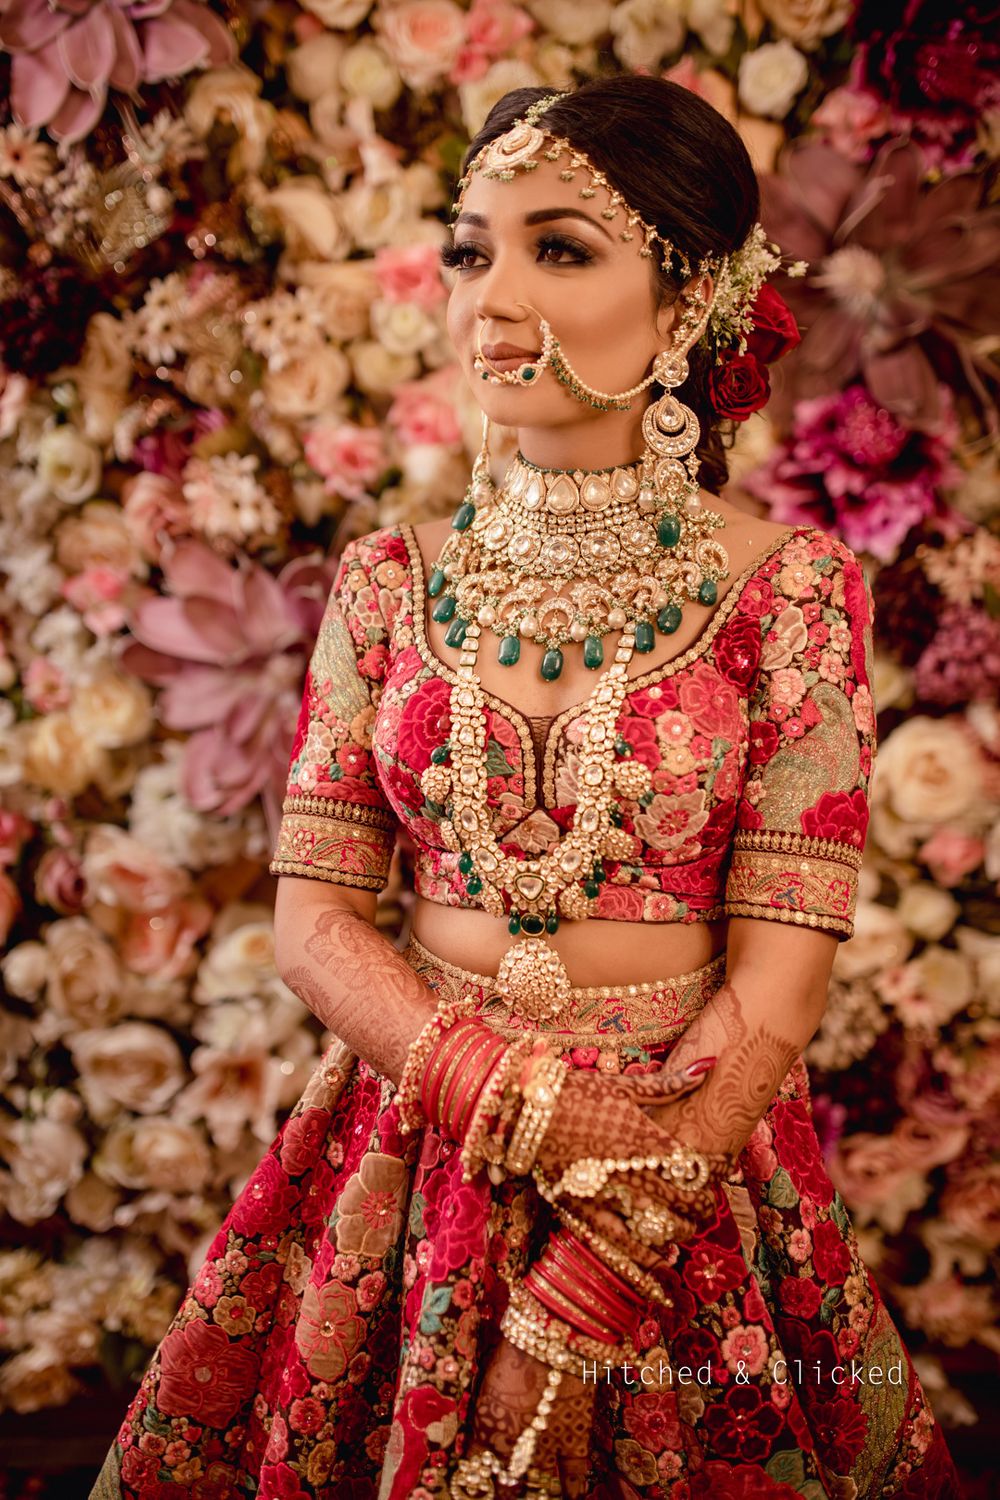 Photo of Bridal portrait with layered jewellery and sabyasachi lehenga